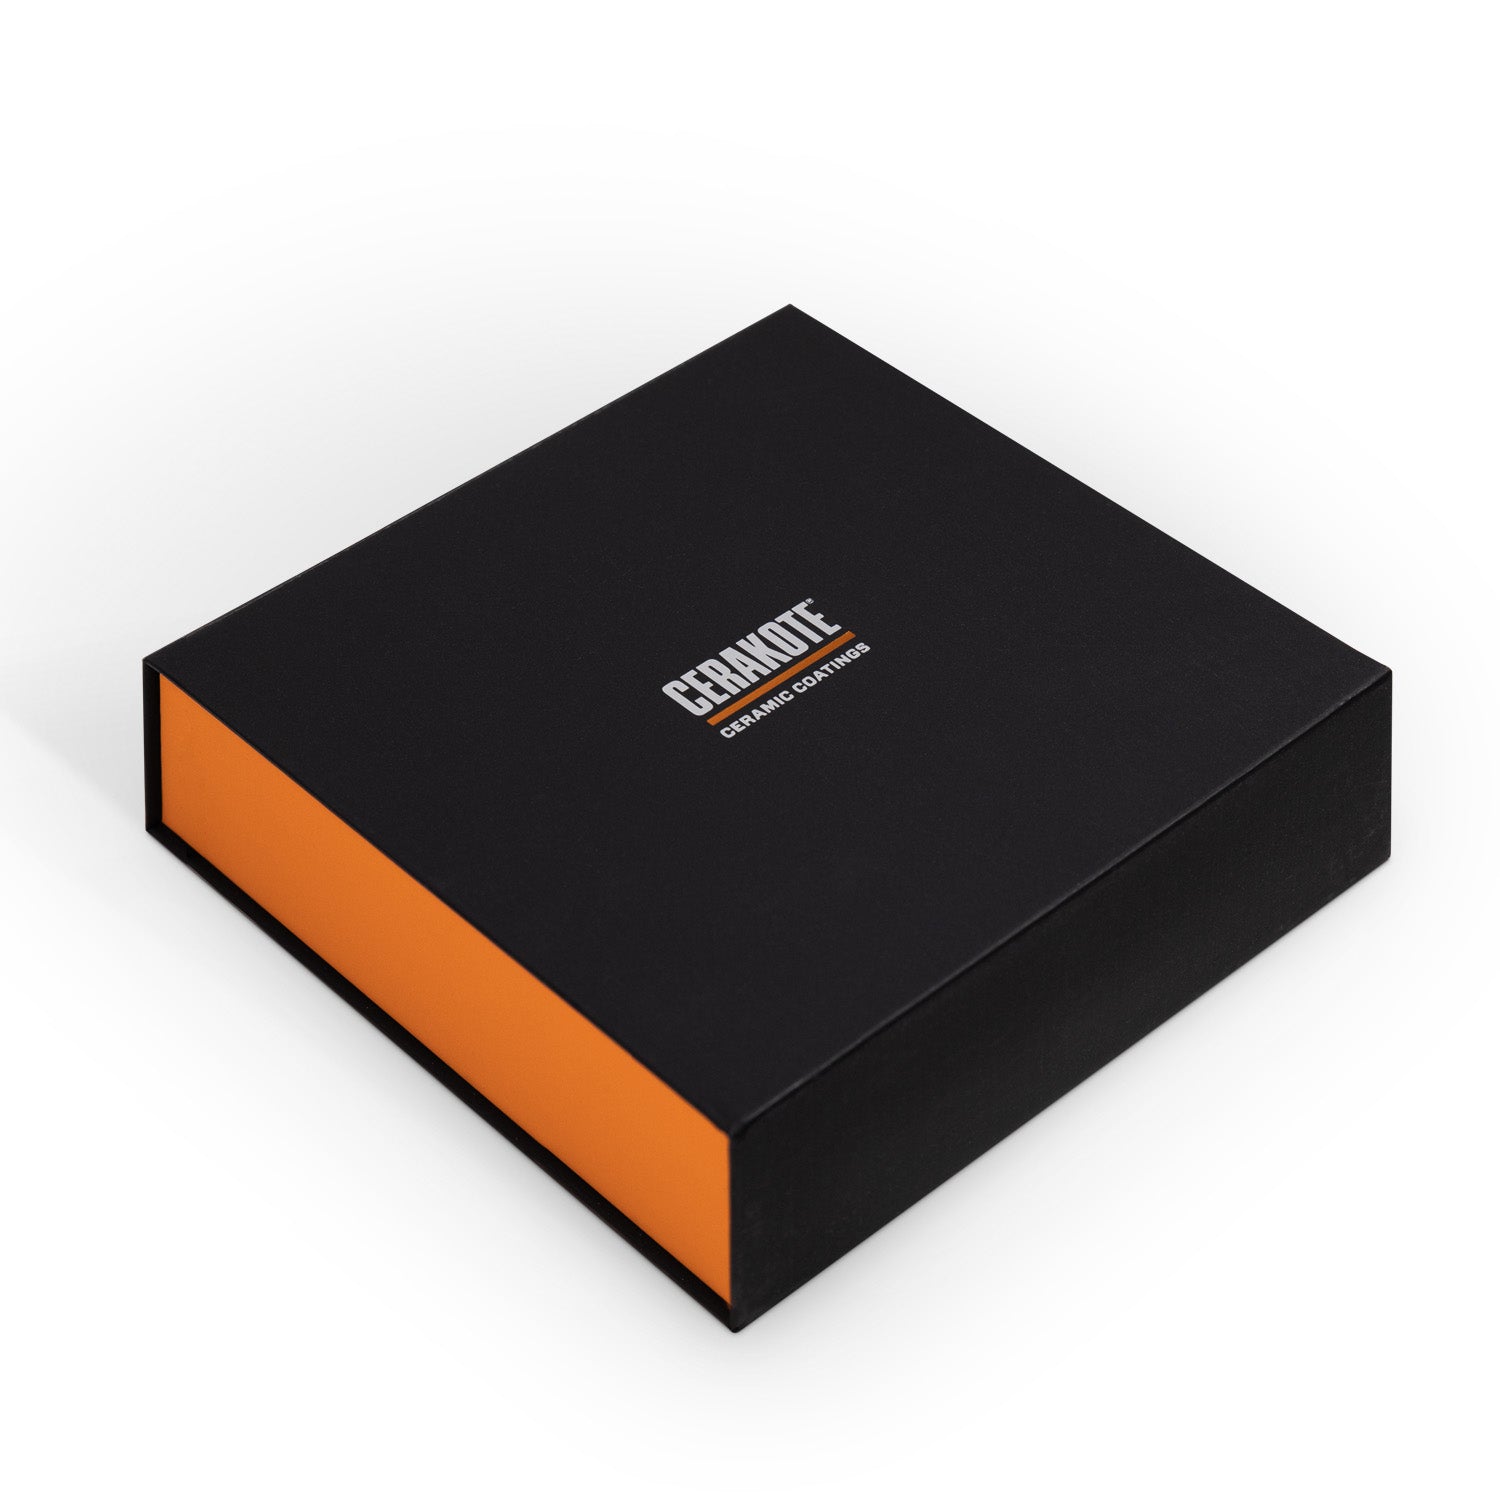 CERAKOTE® Professional Ceramic Paint Coating – Black Box Automotive